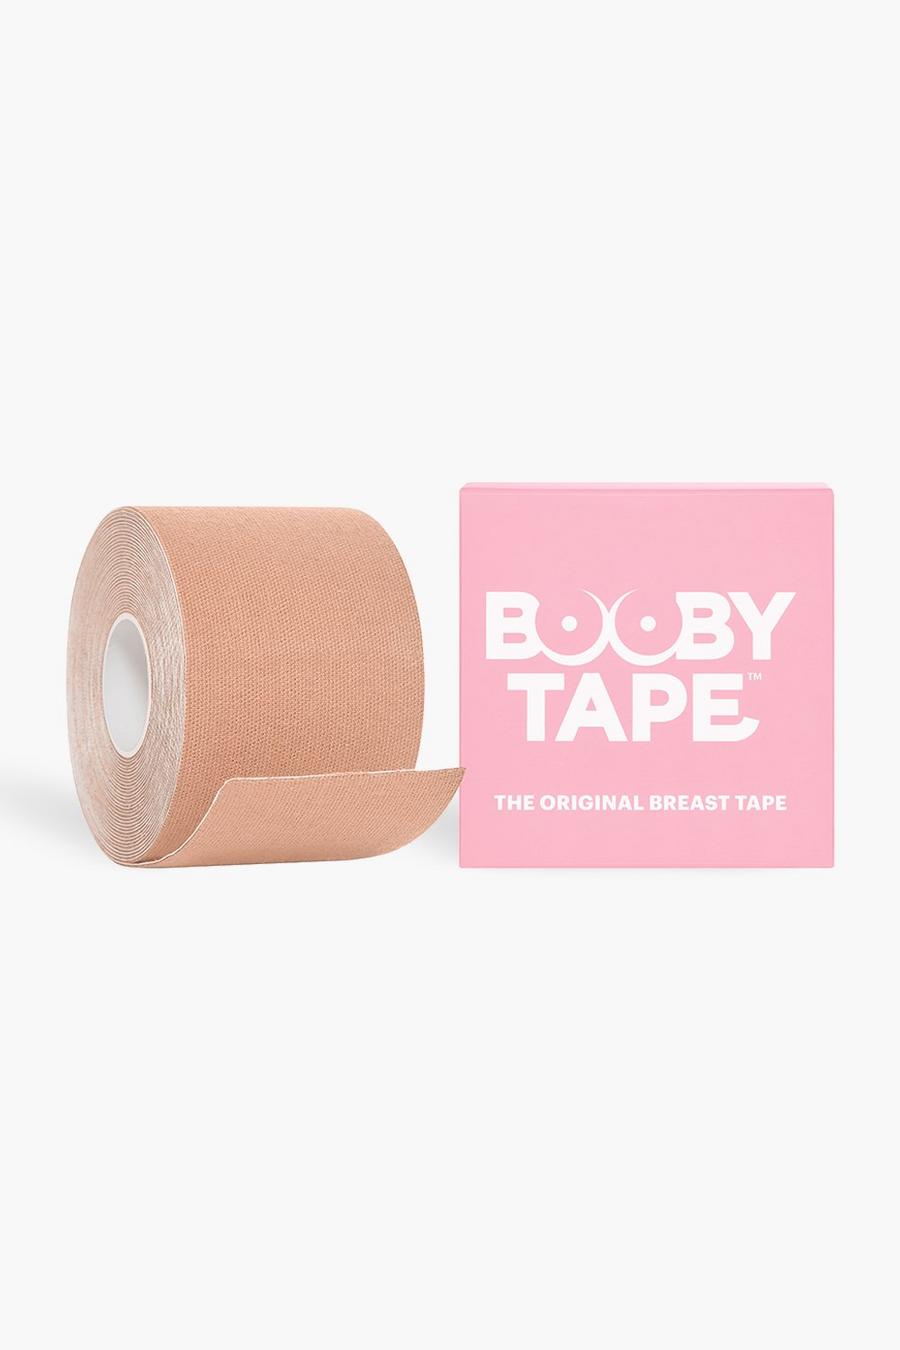 Booby-Tape Nude 5m Rolle , Hautfarben